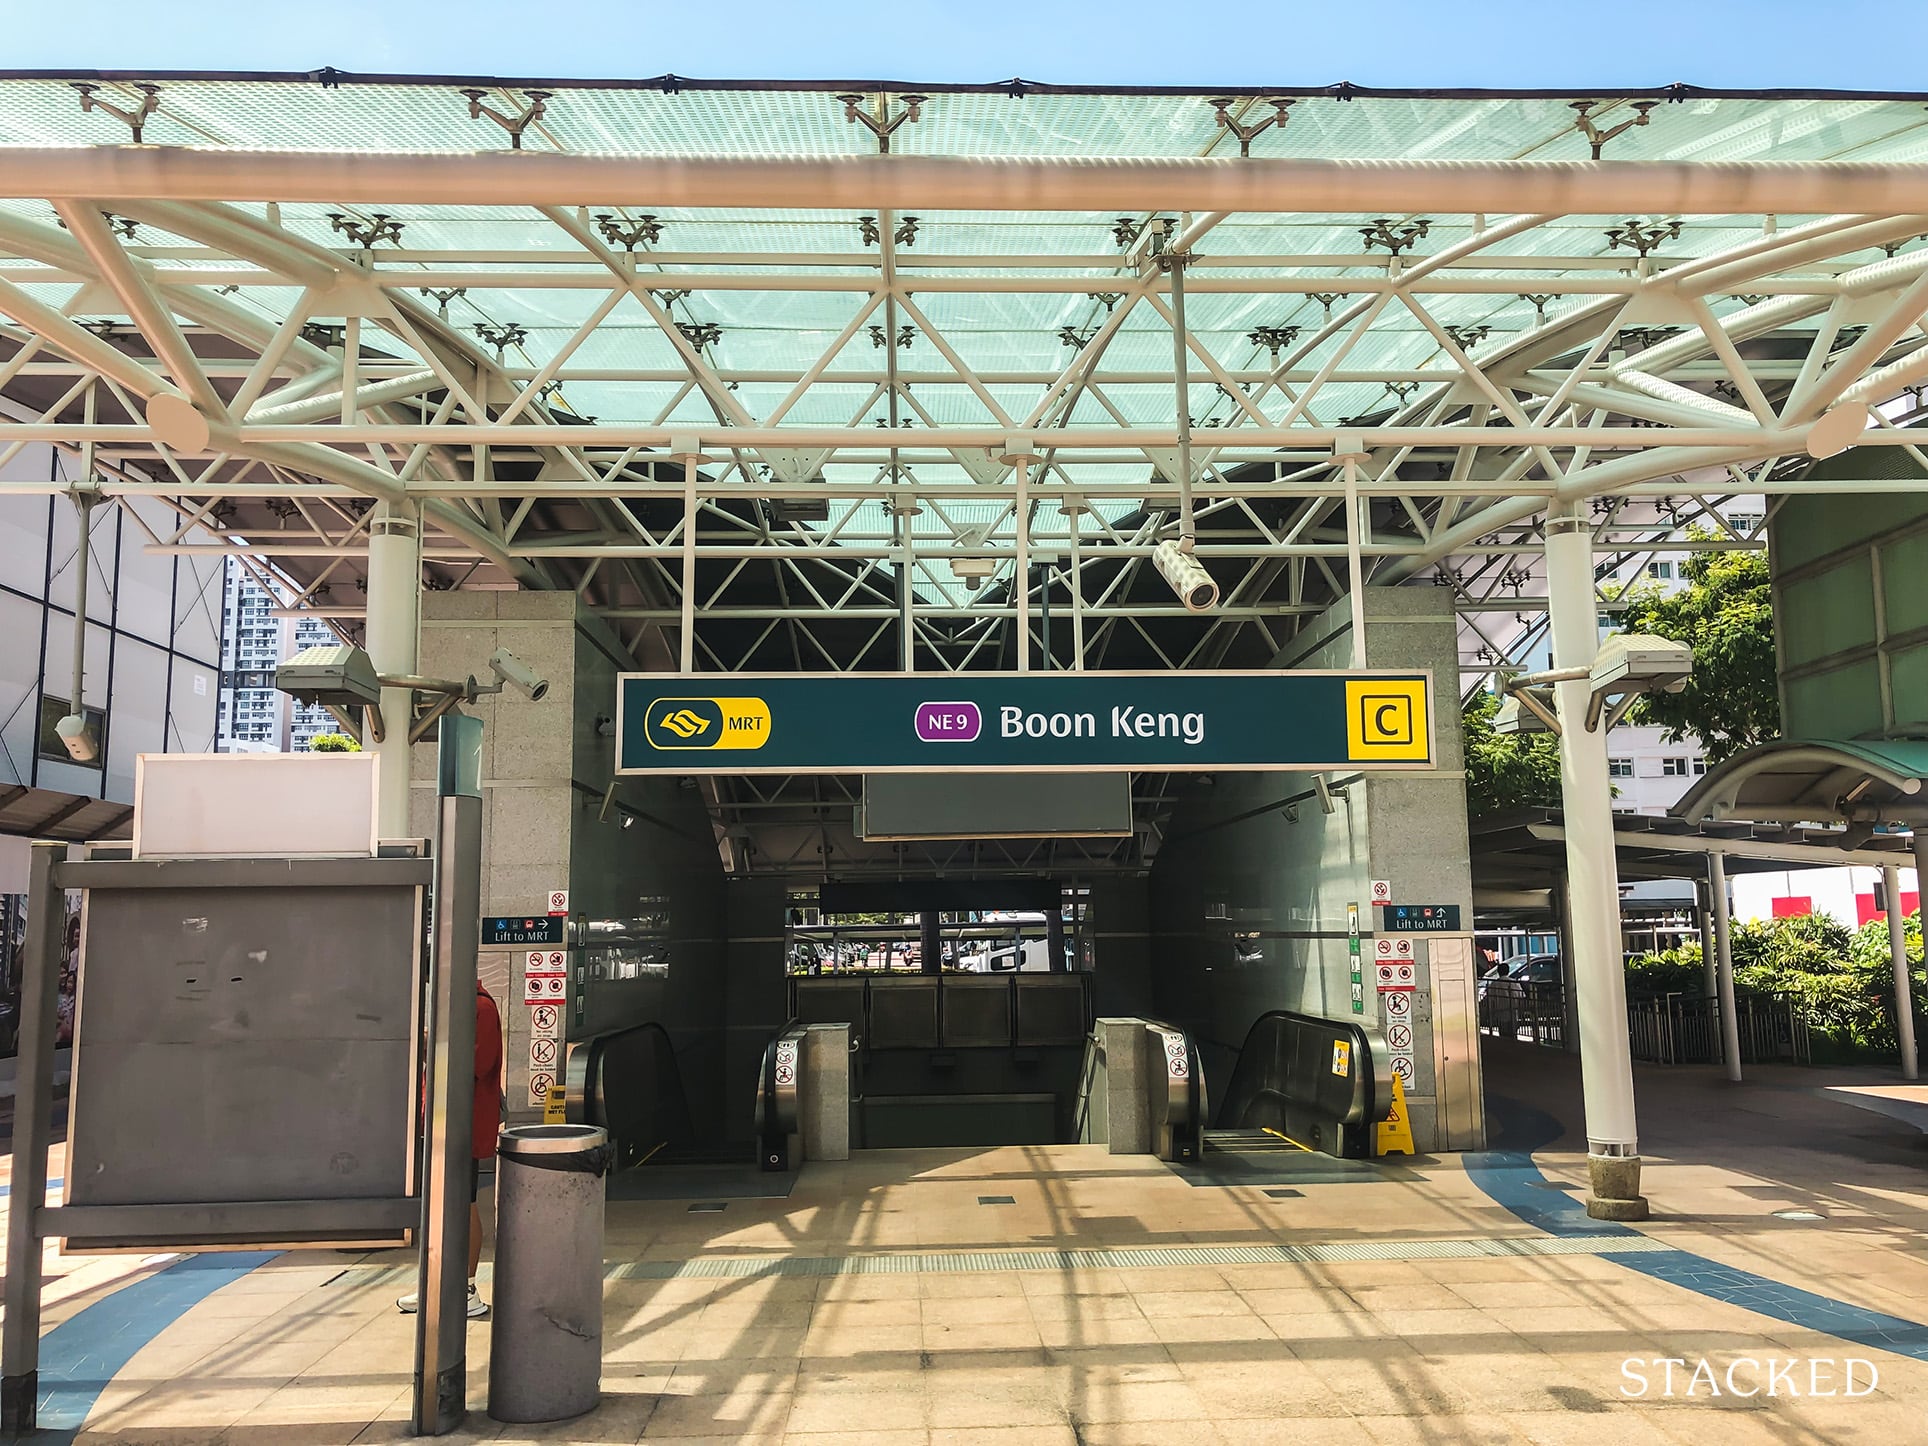 Bendemeer Light Boon Keng train station